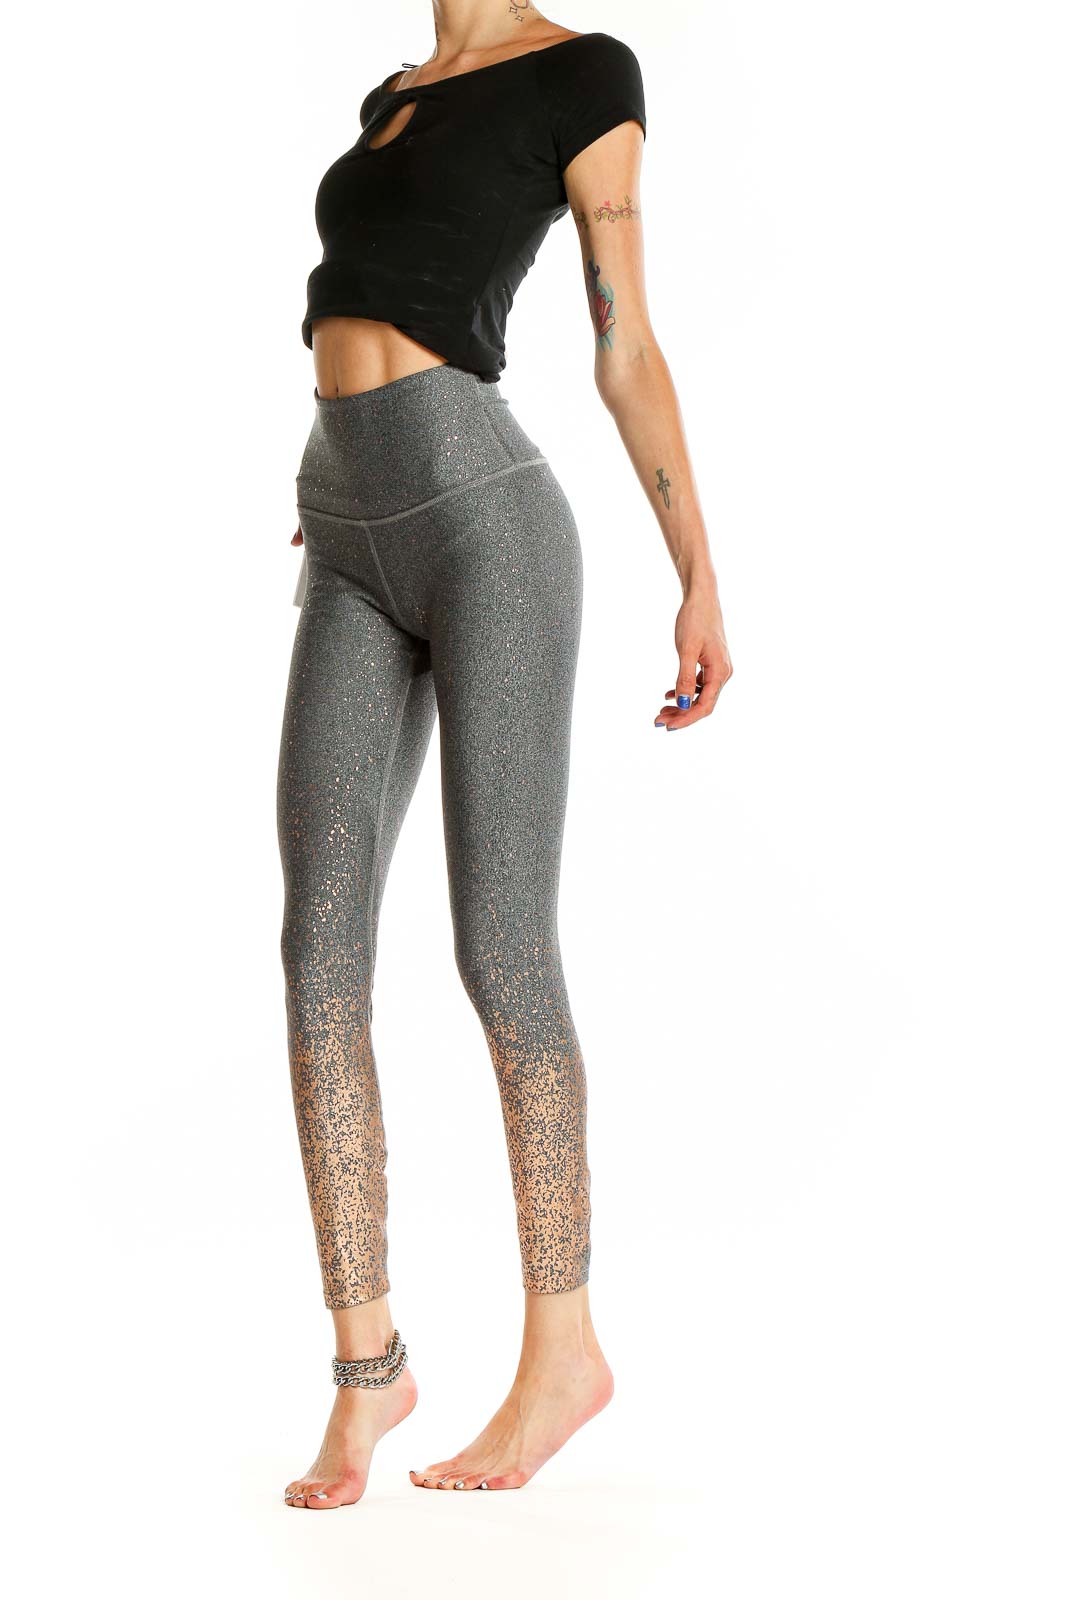 Beyond Yoga - Gray Shimmer Activewear Leggings Polyester Spandex Nylon